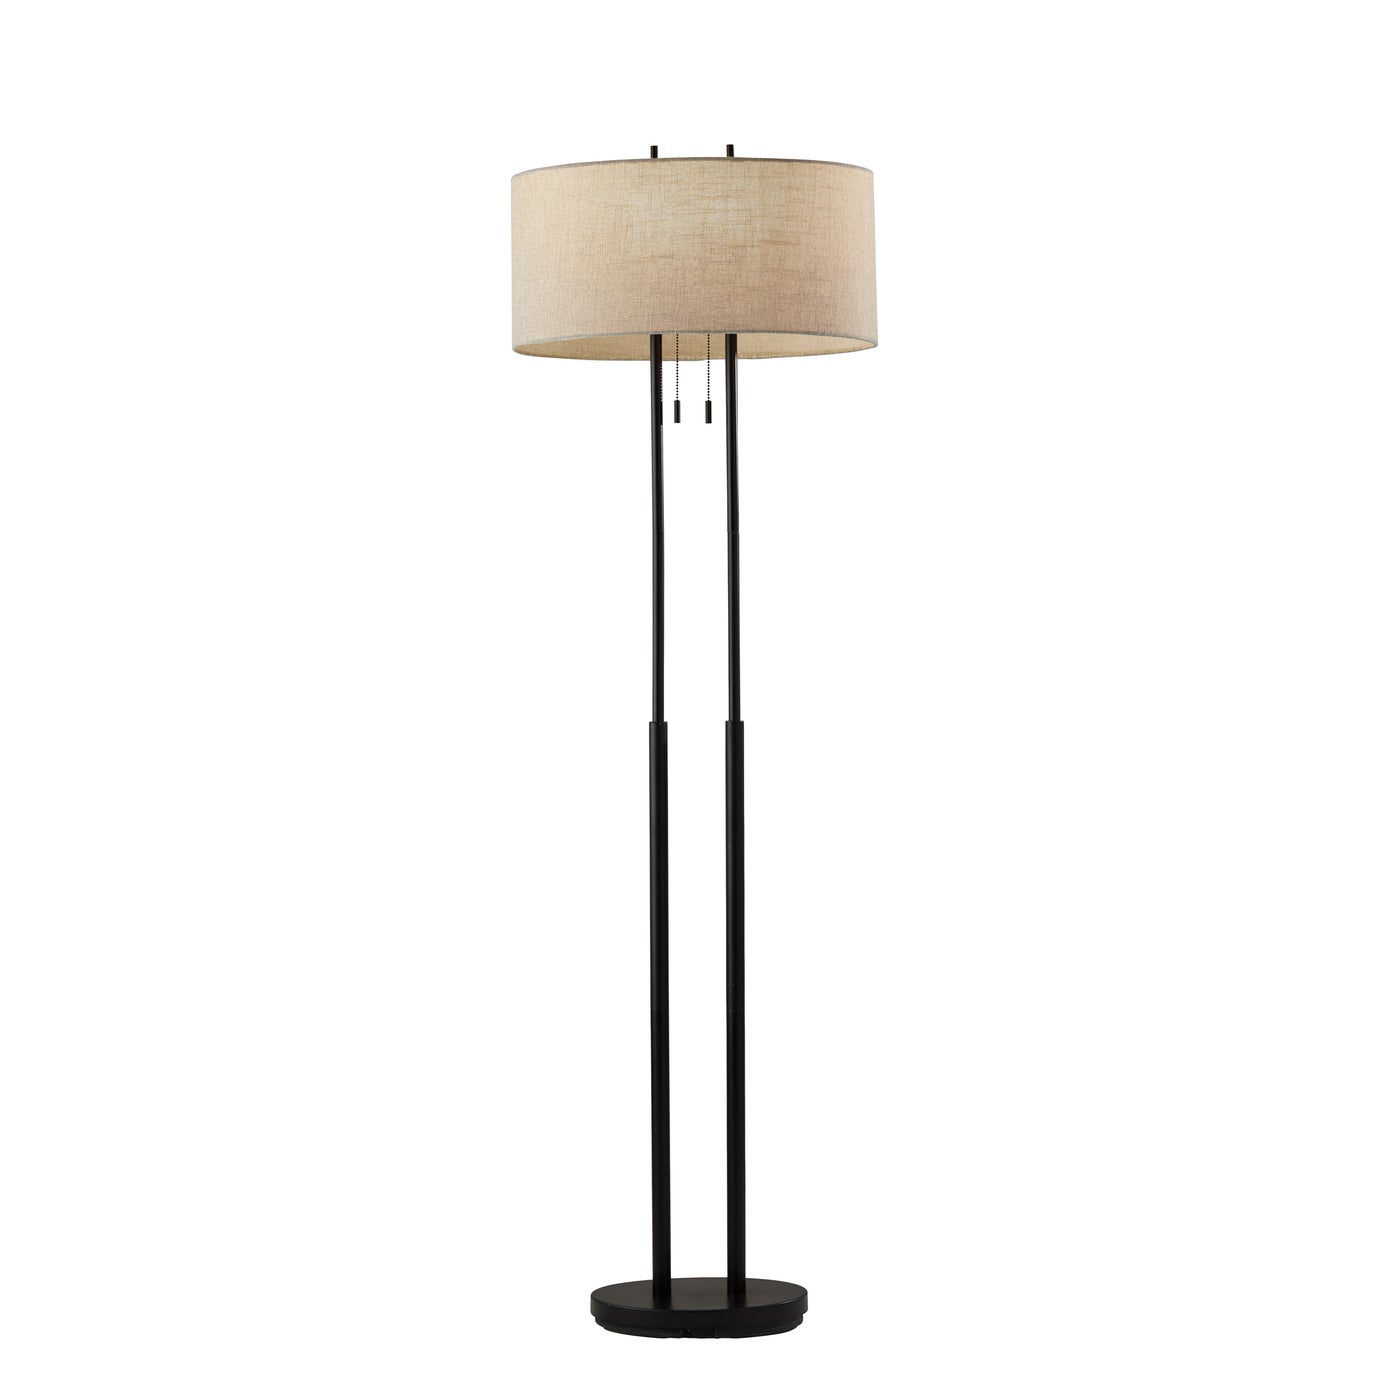 Adesso Home - 4016-26 - Two Light Floor Lamp - Duet - Antique Bronze